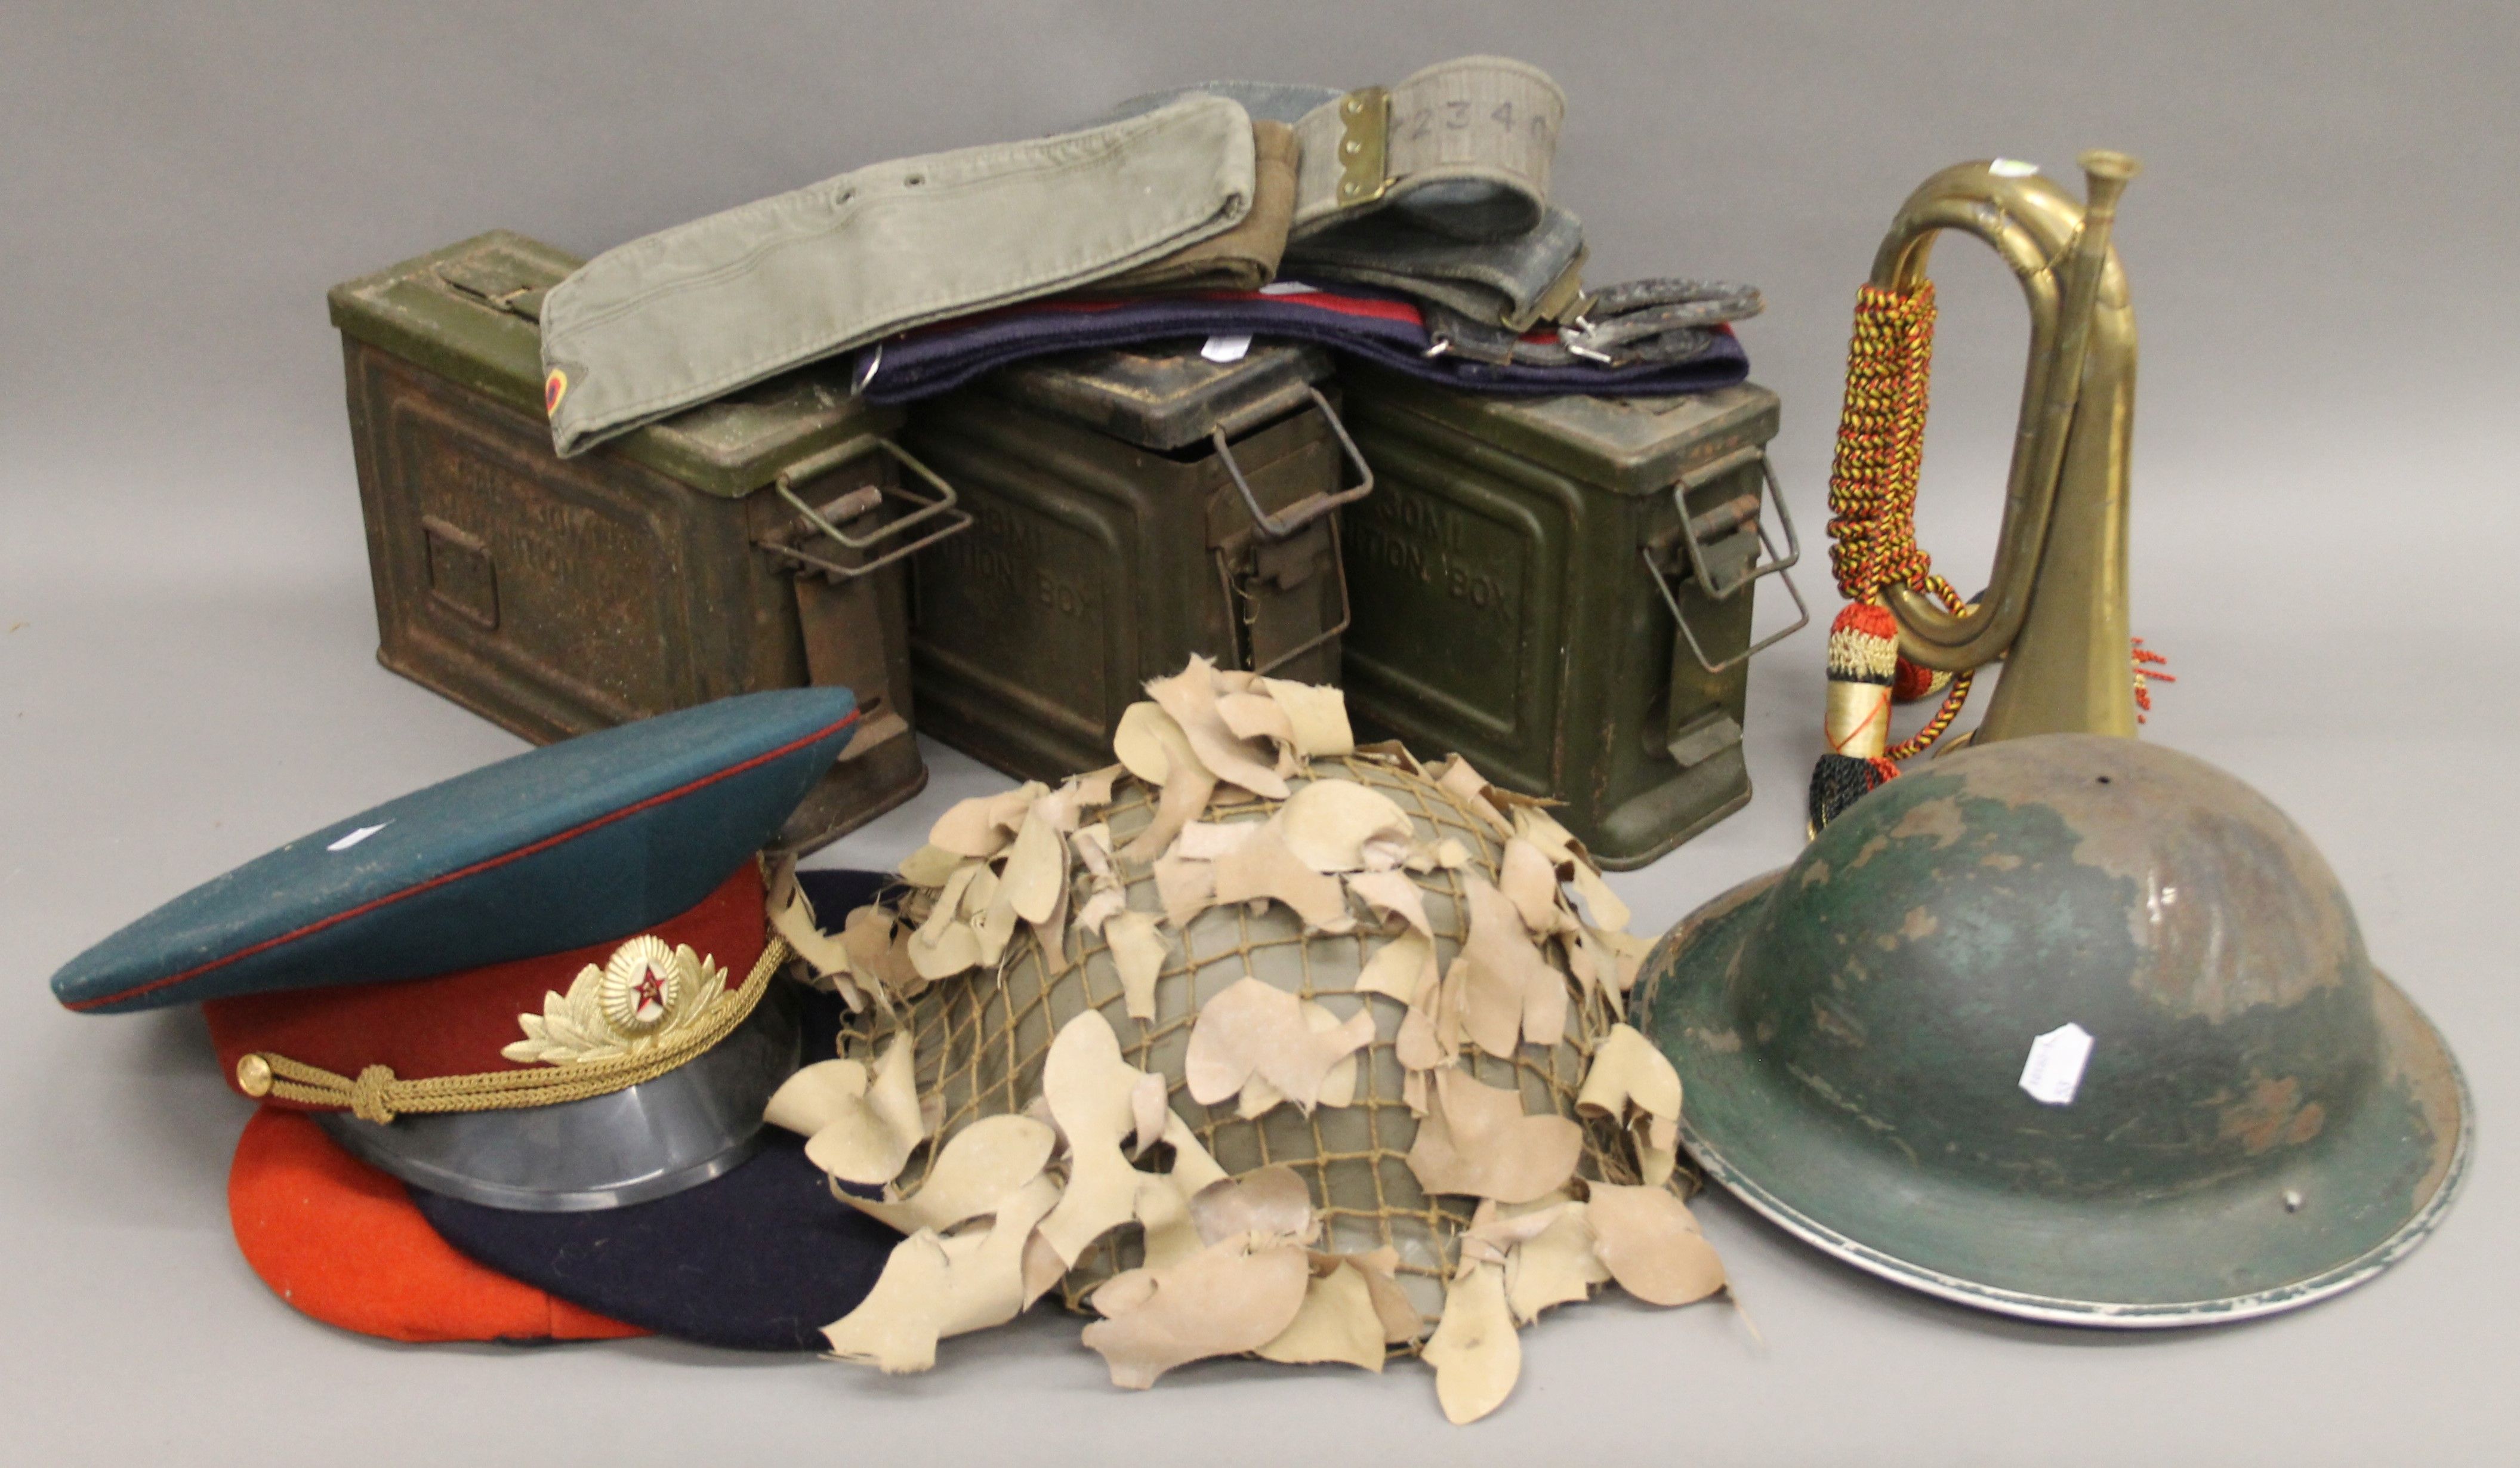 A quantity of various militaria, including helmets, belts, ammunition boxes, etc.